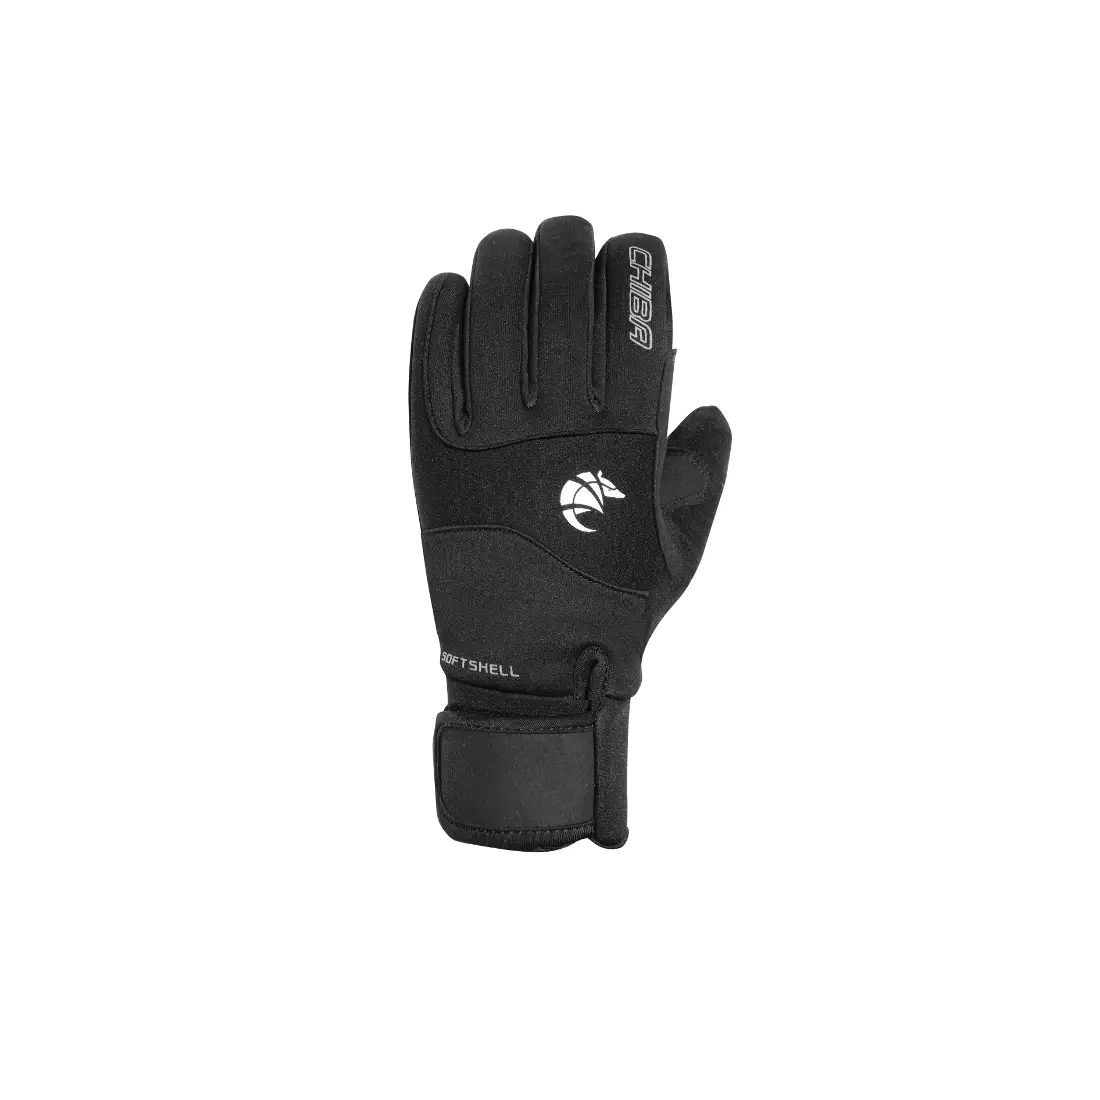 CHIBA CLASSIC winter cycling gloves, black 31528